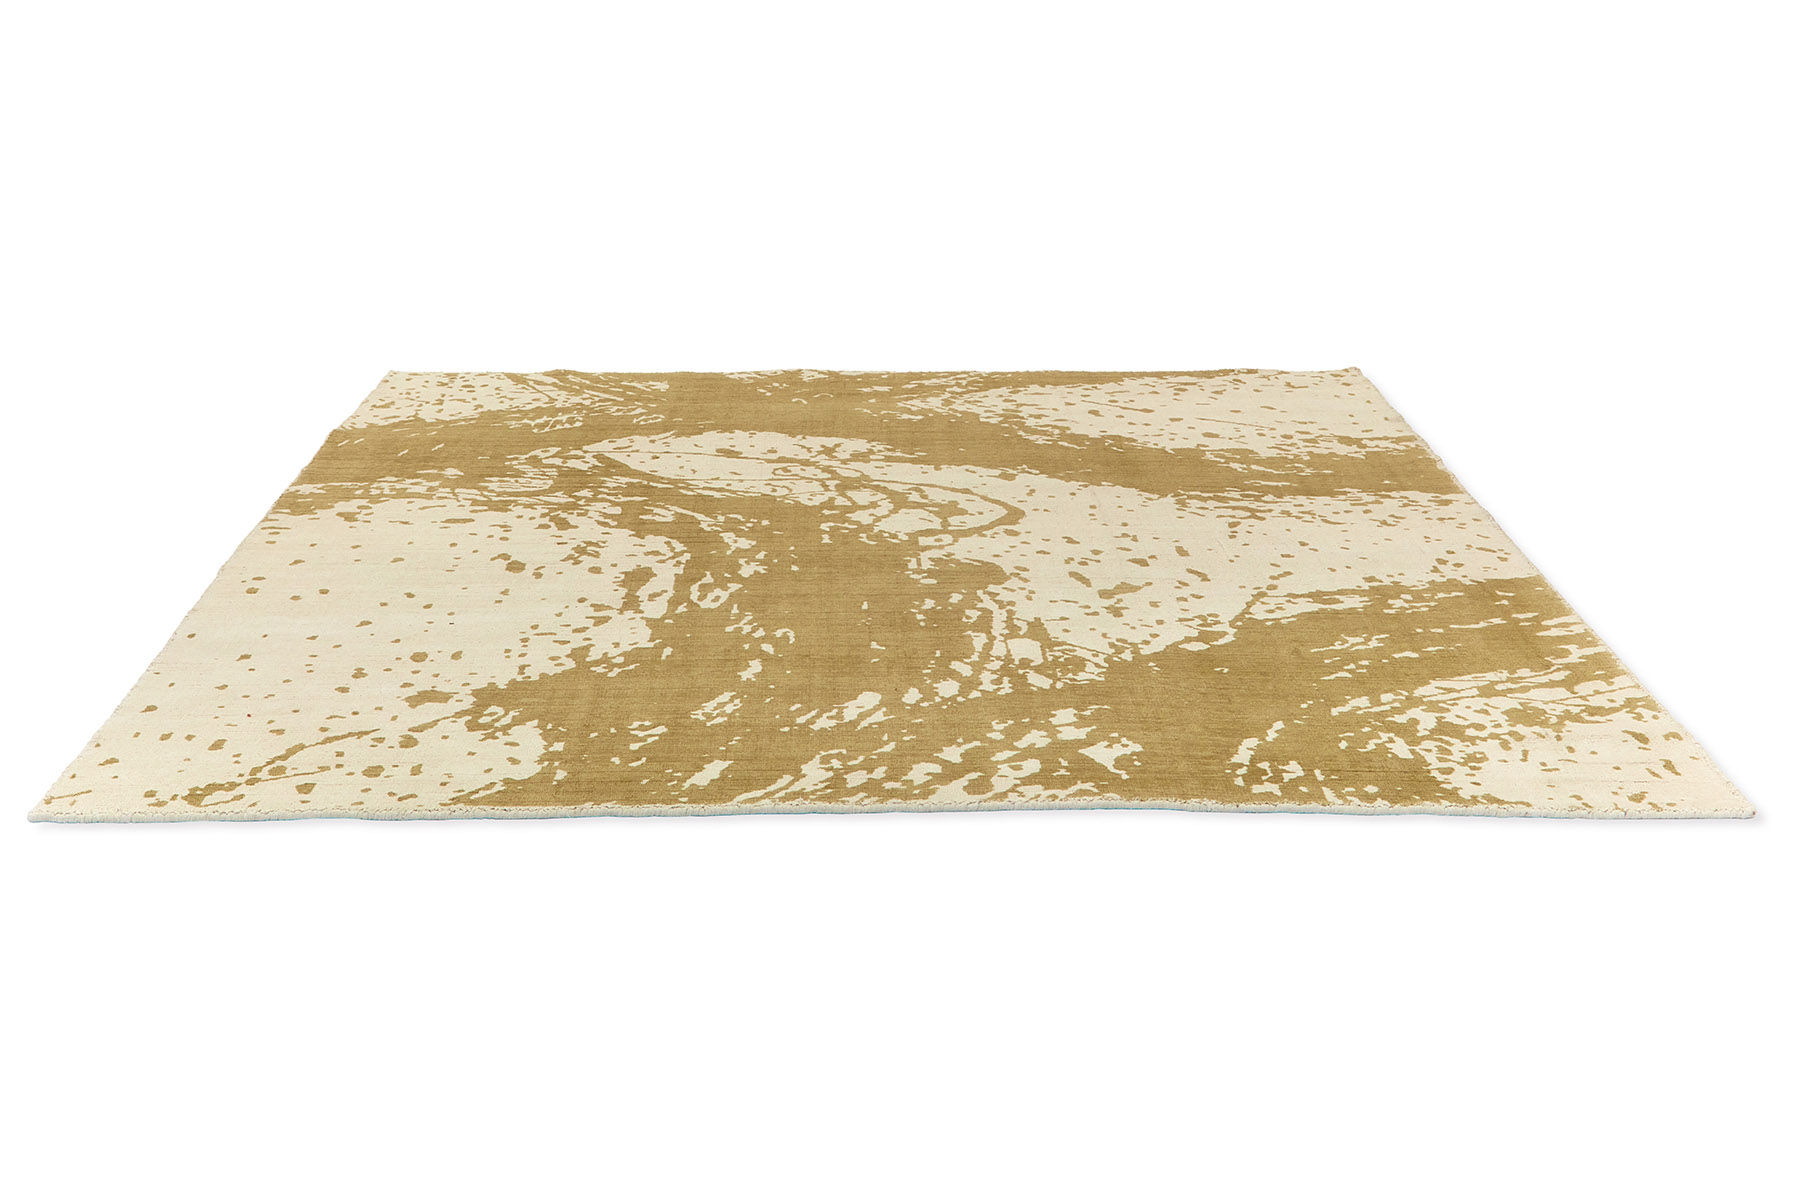 Enigmatic Sahara Awakening Rug ☞ Size: 250 x 350 cm